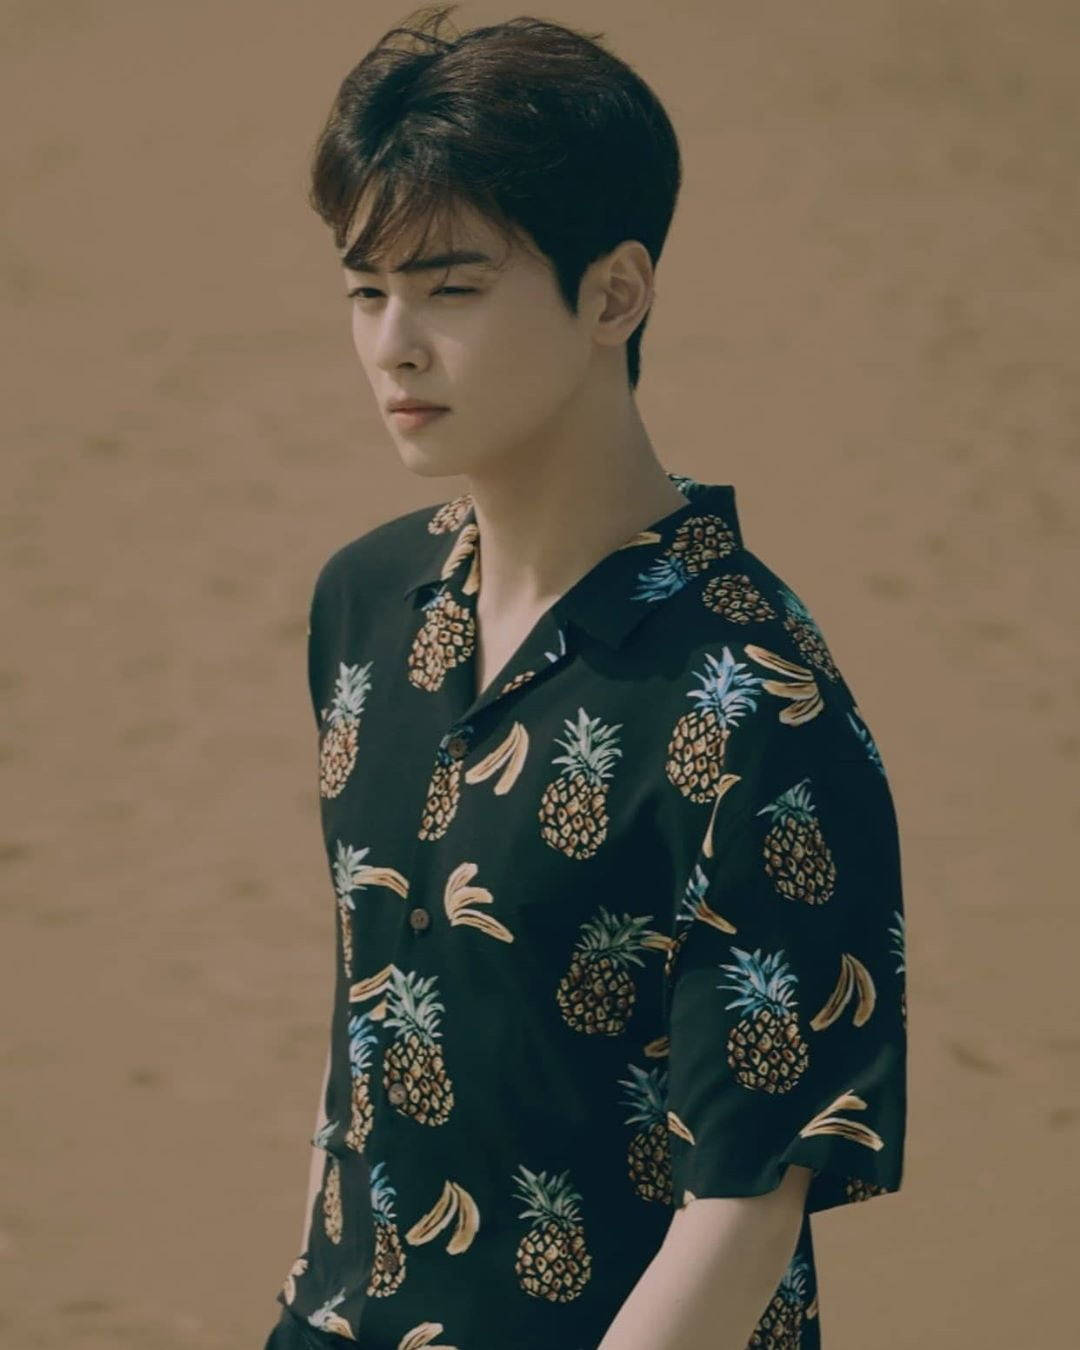 Pineapple Shirt Cha Eunwoo Background